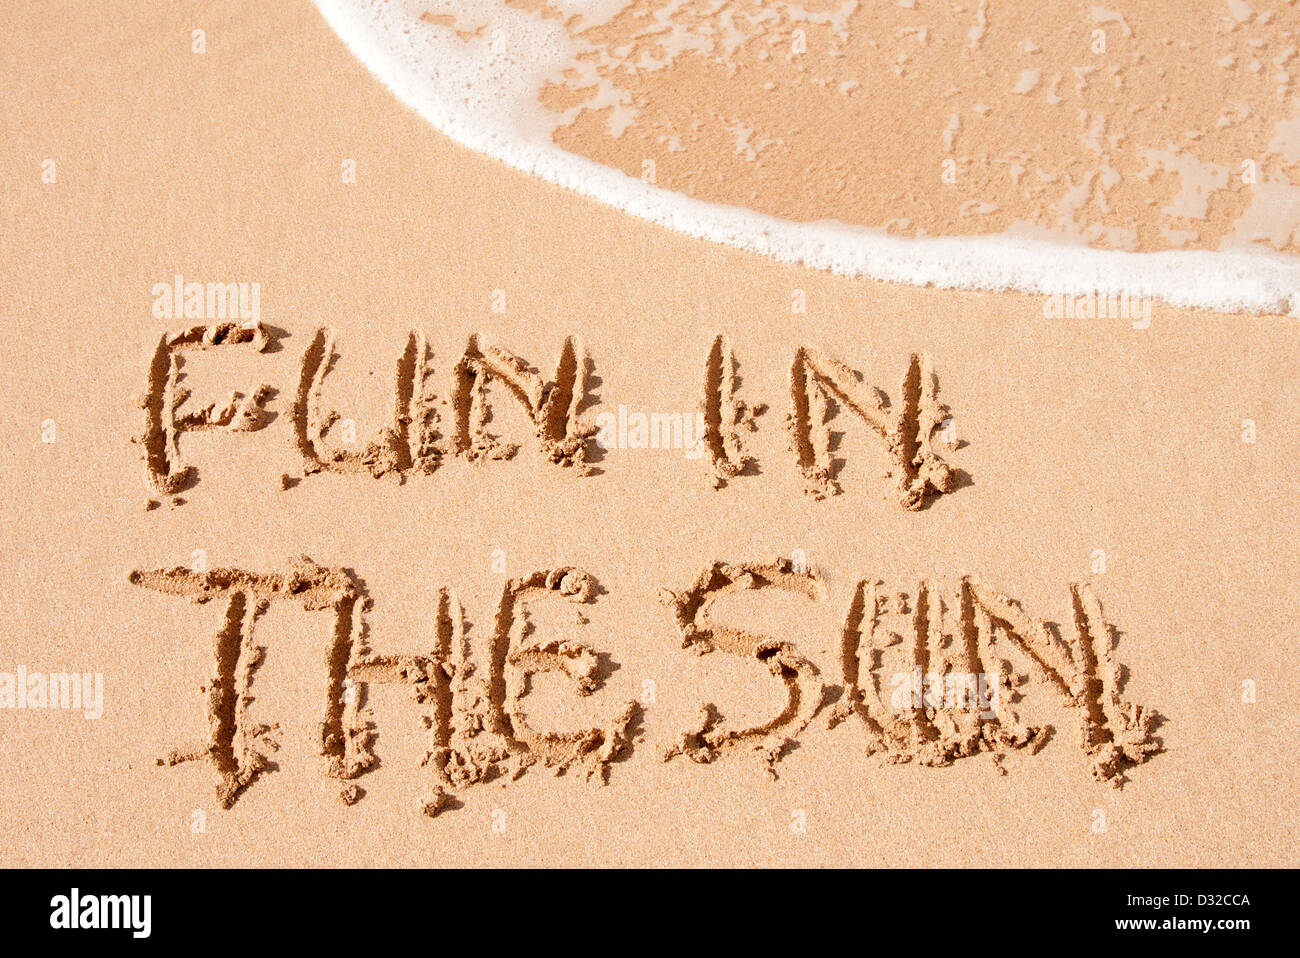 fun in the sun written in the sand on a beach Stock Photo